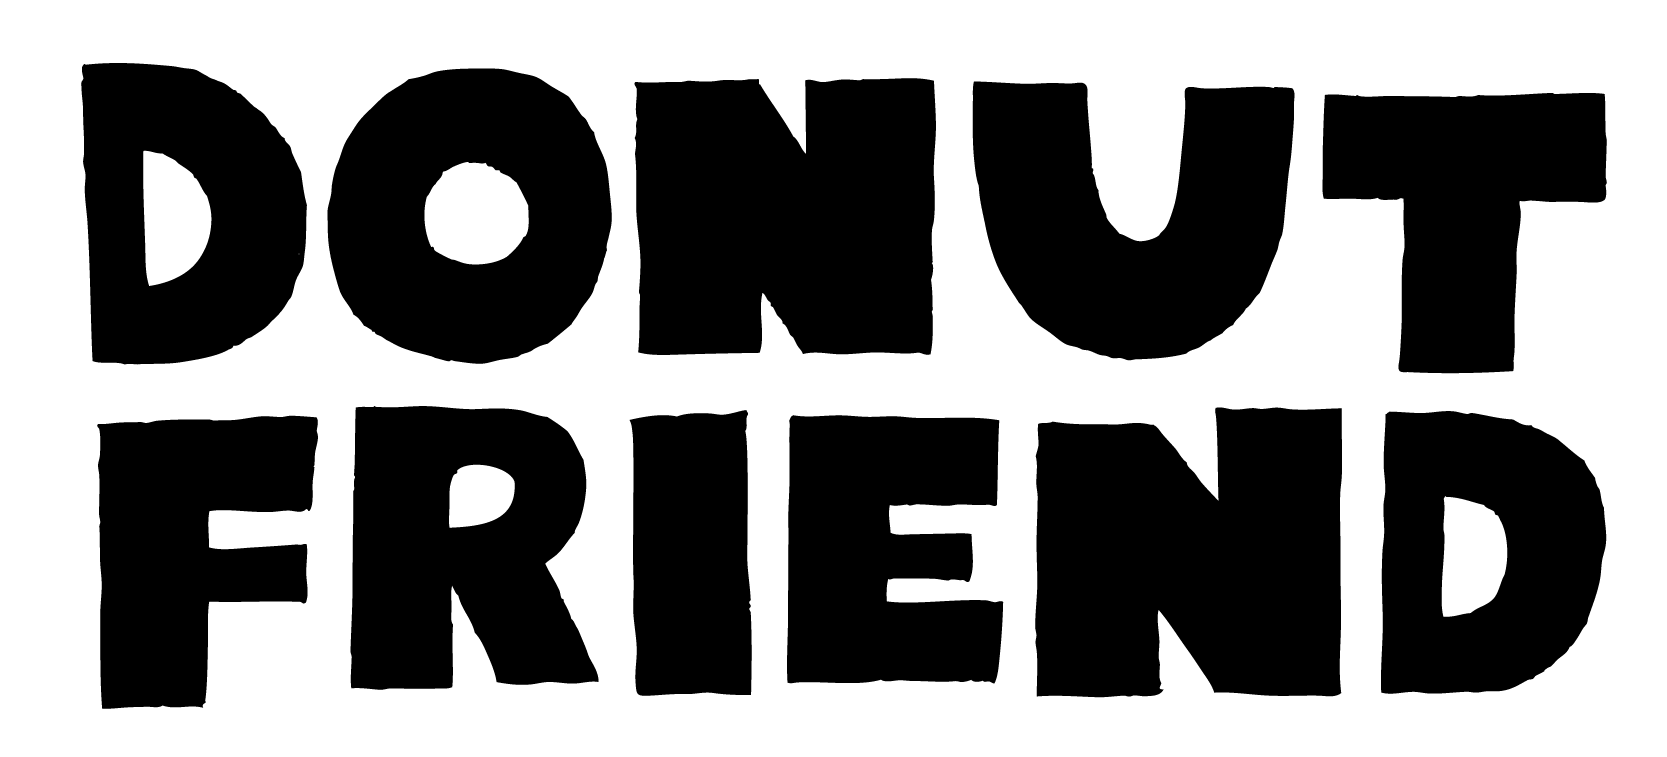 text-logo-black-01.png